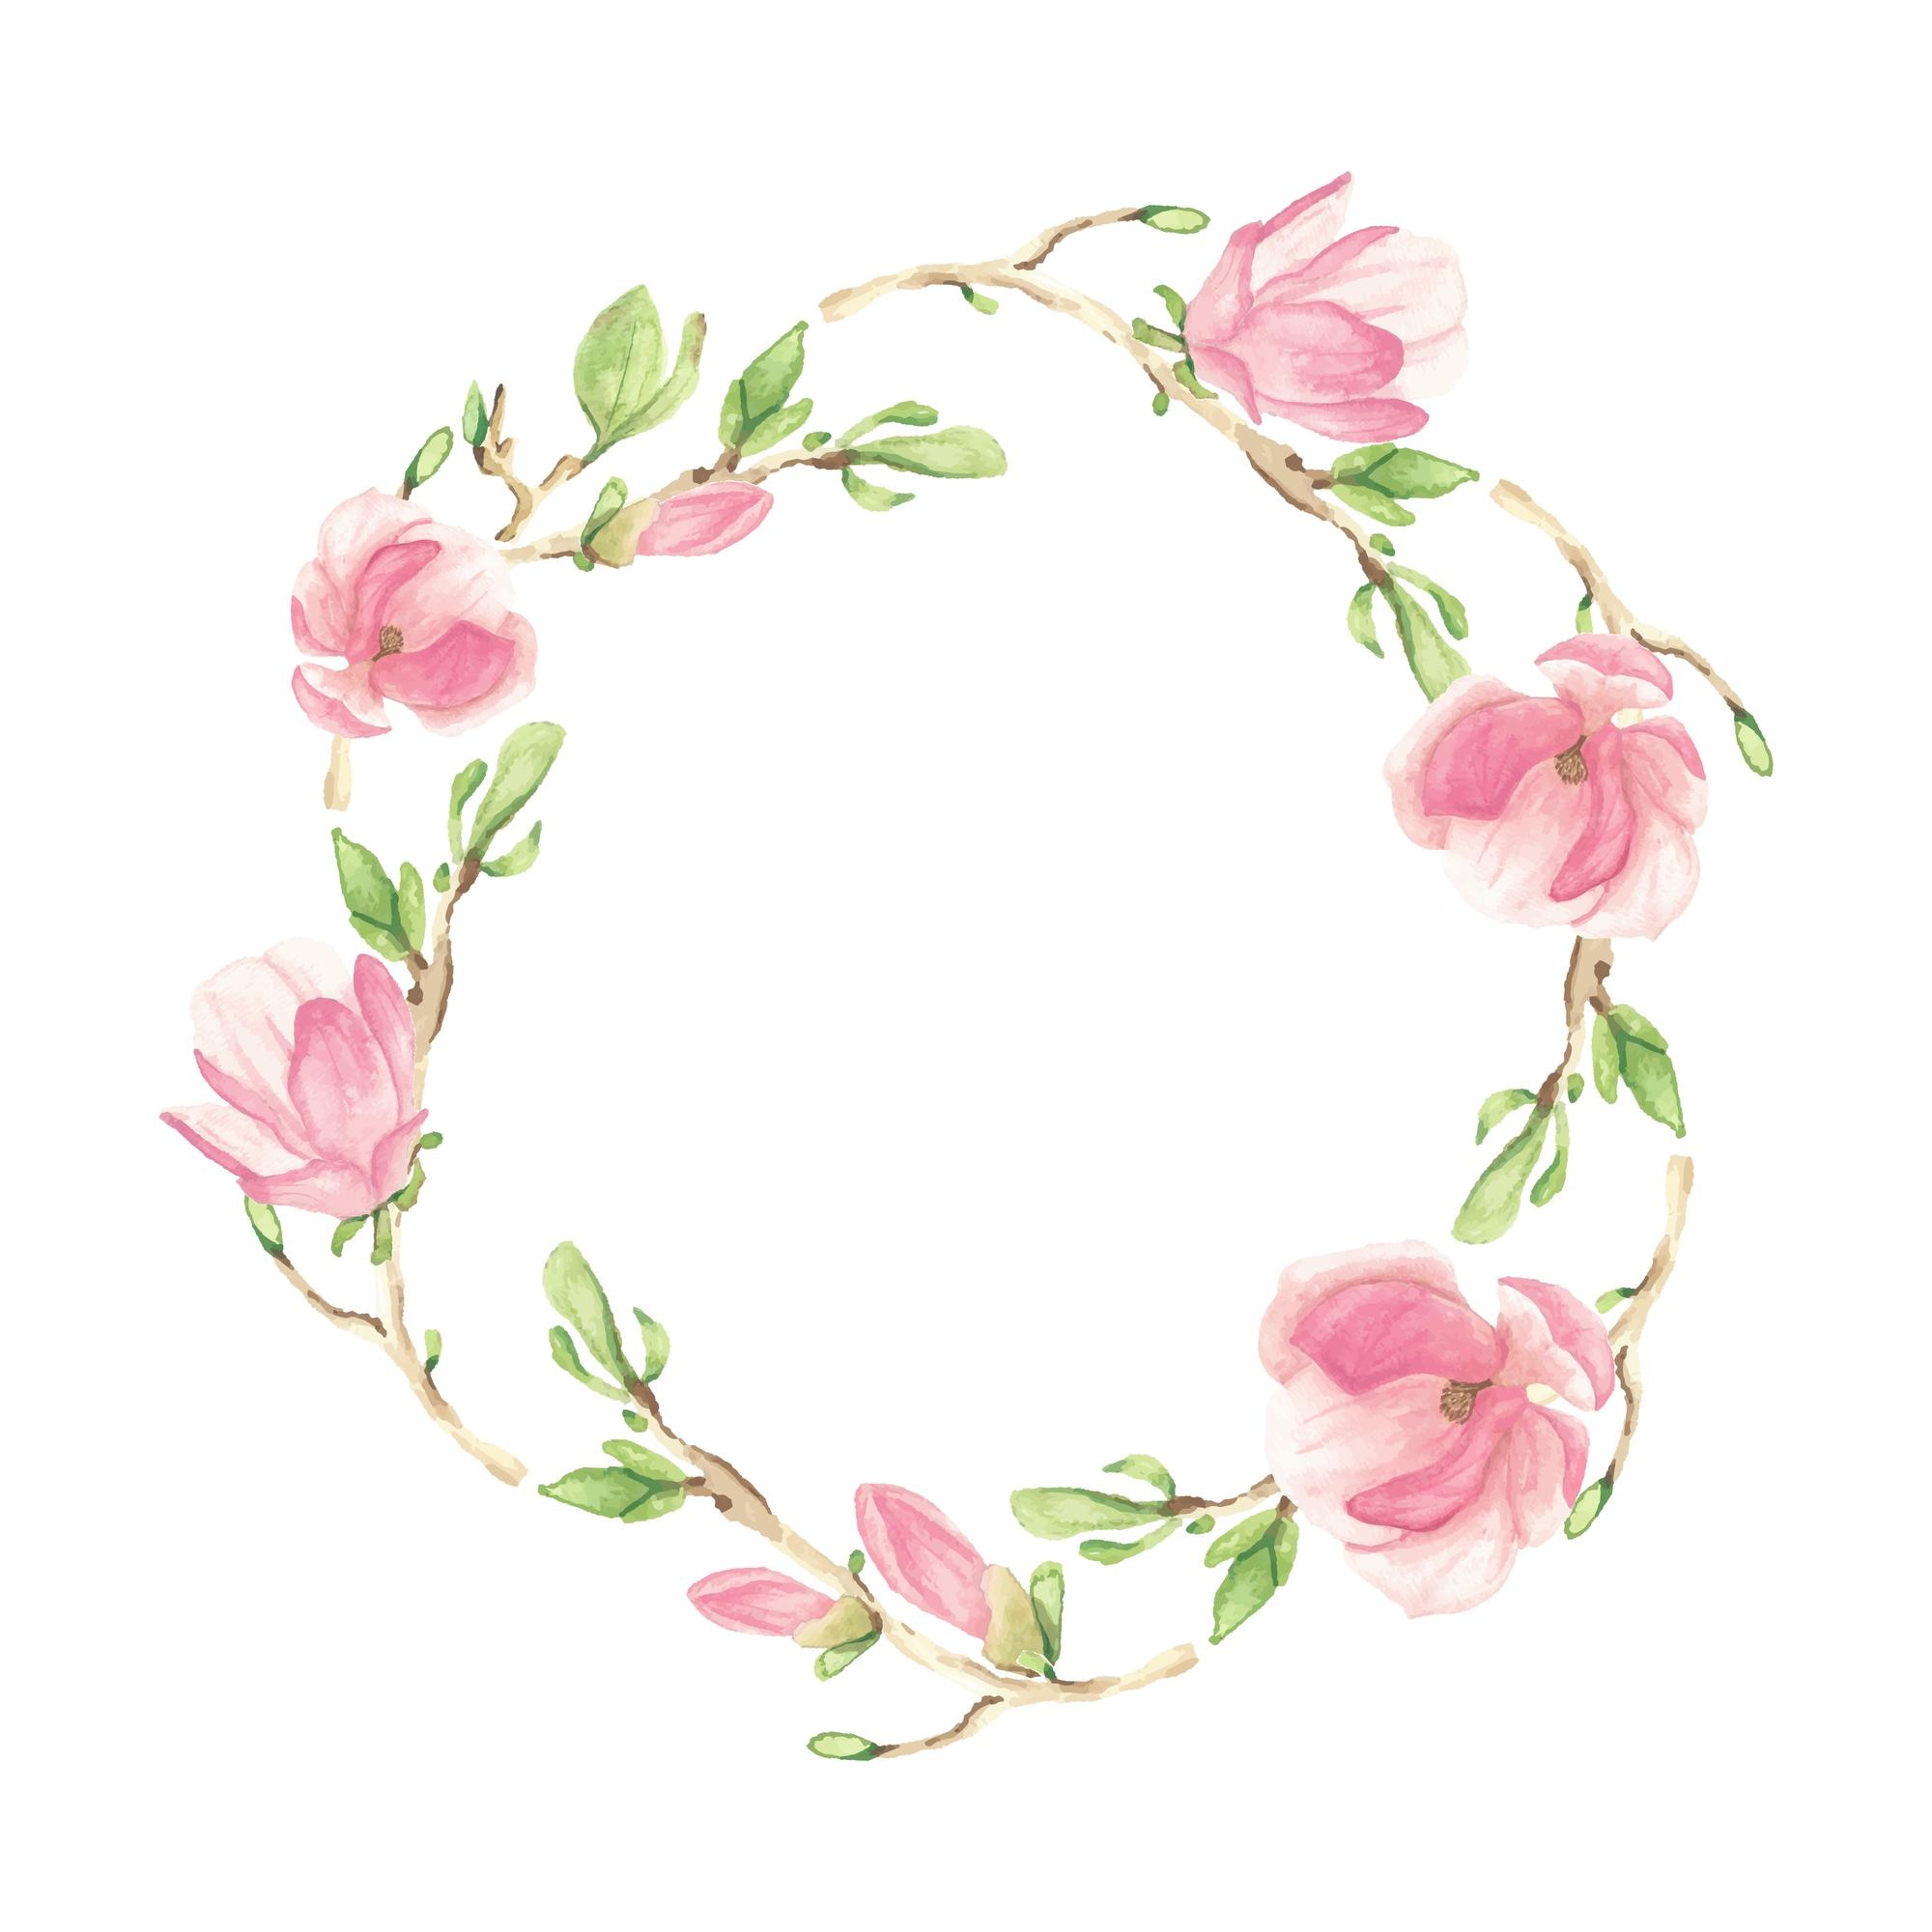 Marco de corona de flores ramas de magnolia floreciente rosa acuarela Vector Premium